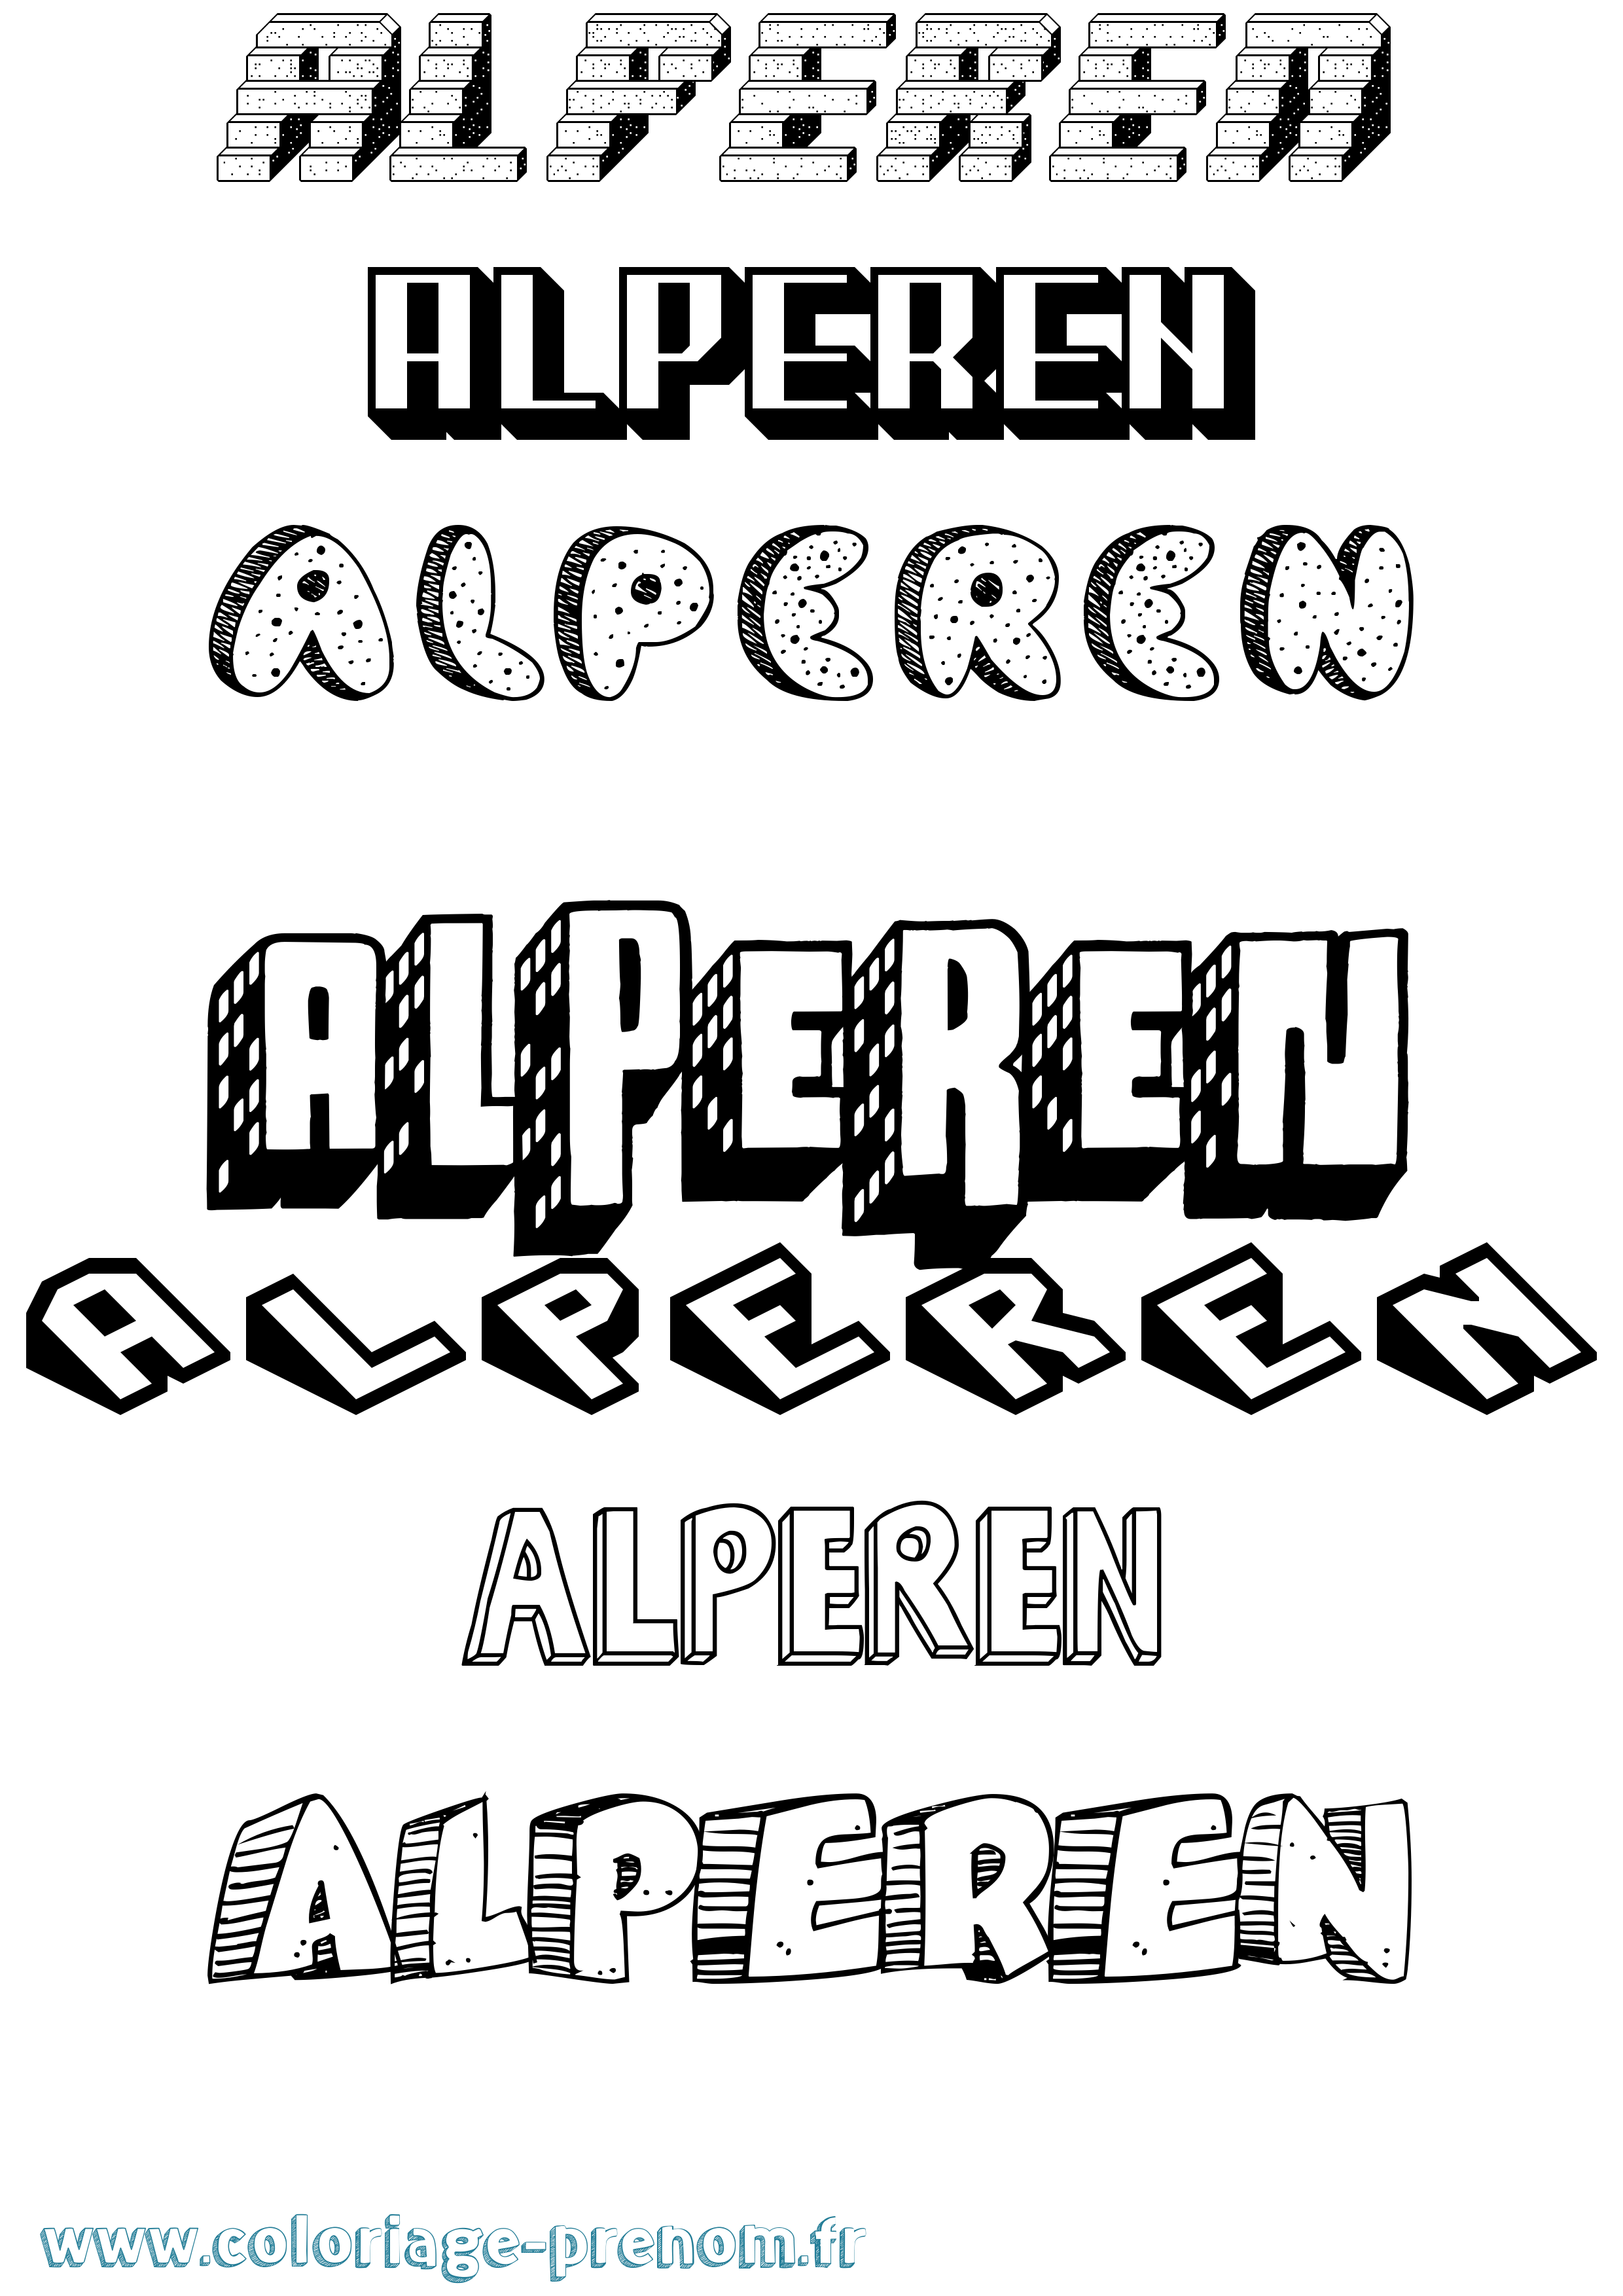 Coloriage prénom Alperen Effet 3D